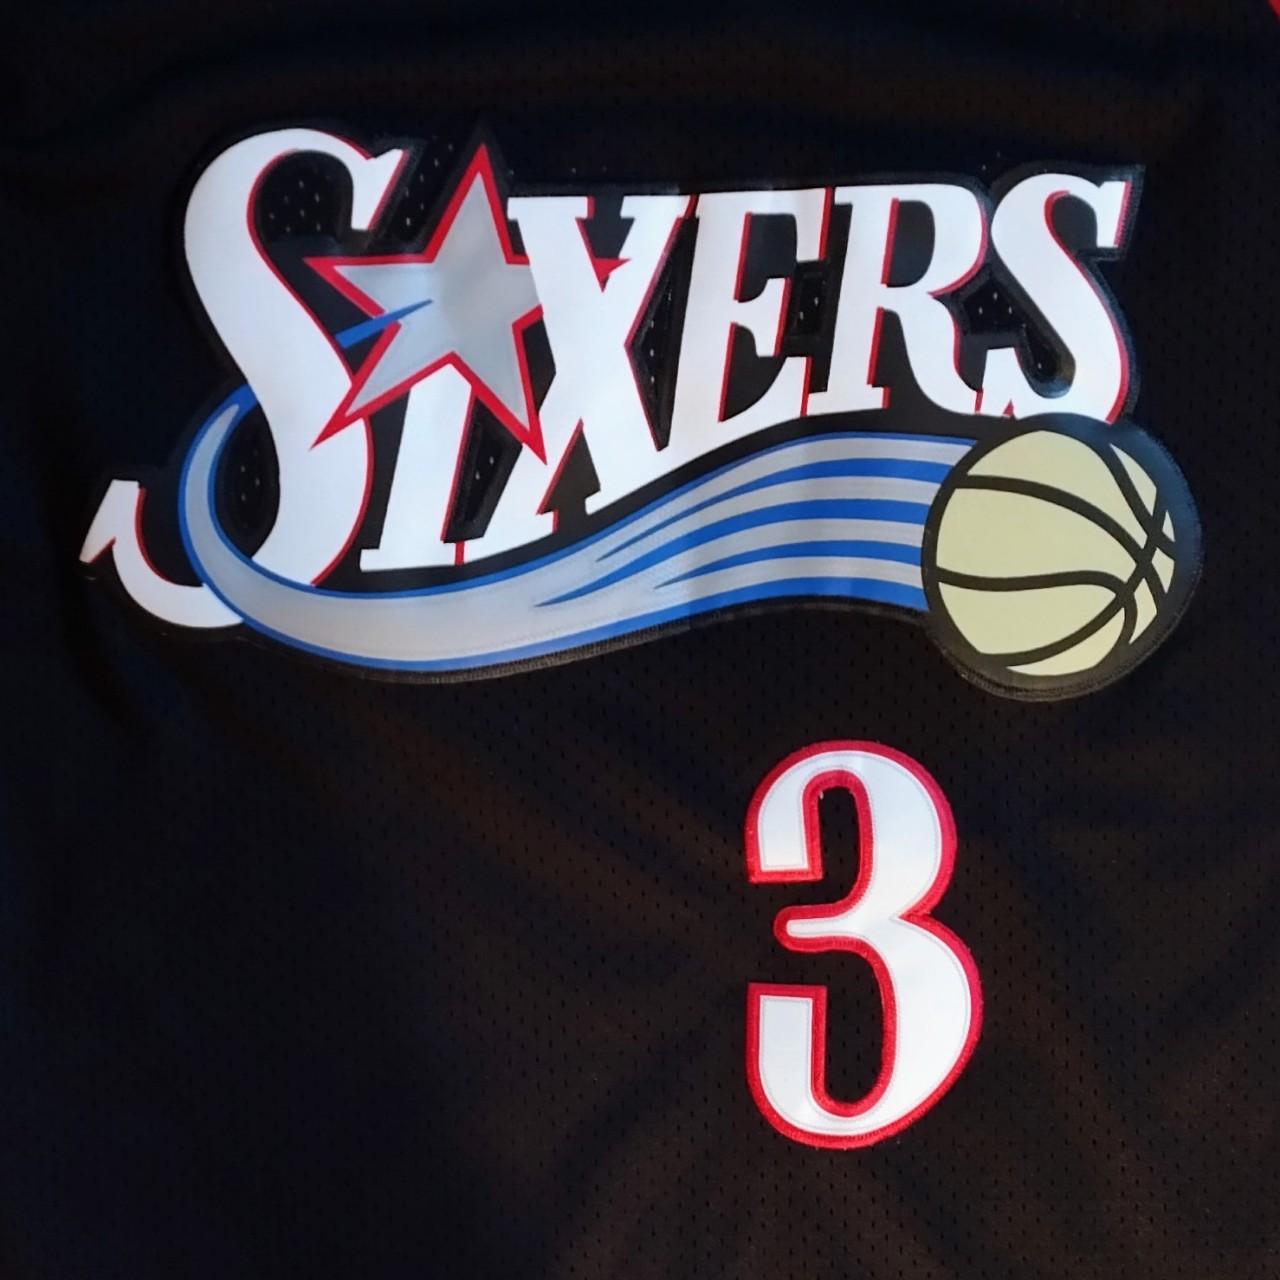 Philadelphia 76ers Sixers Replica Jersey Adidas - Depop